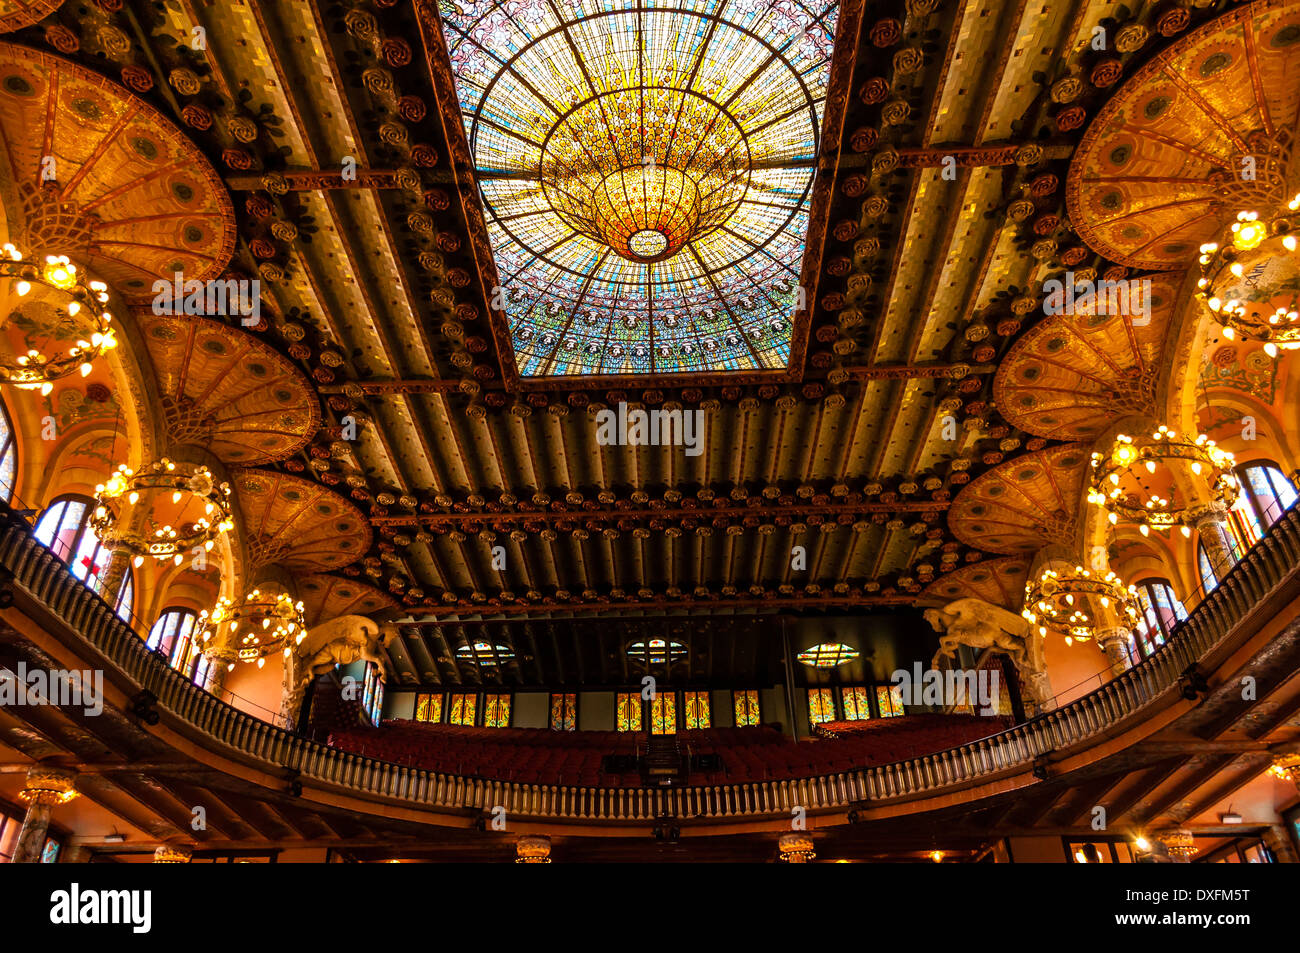 Concert hall interior, Interior of Palau de la Música Catalana, Barcelona, Catalonia, Spain Stock Photo